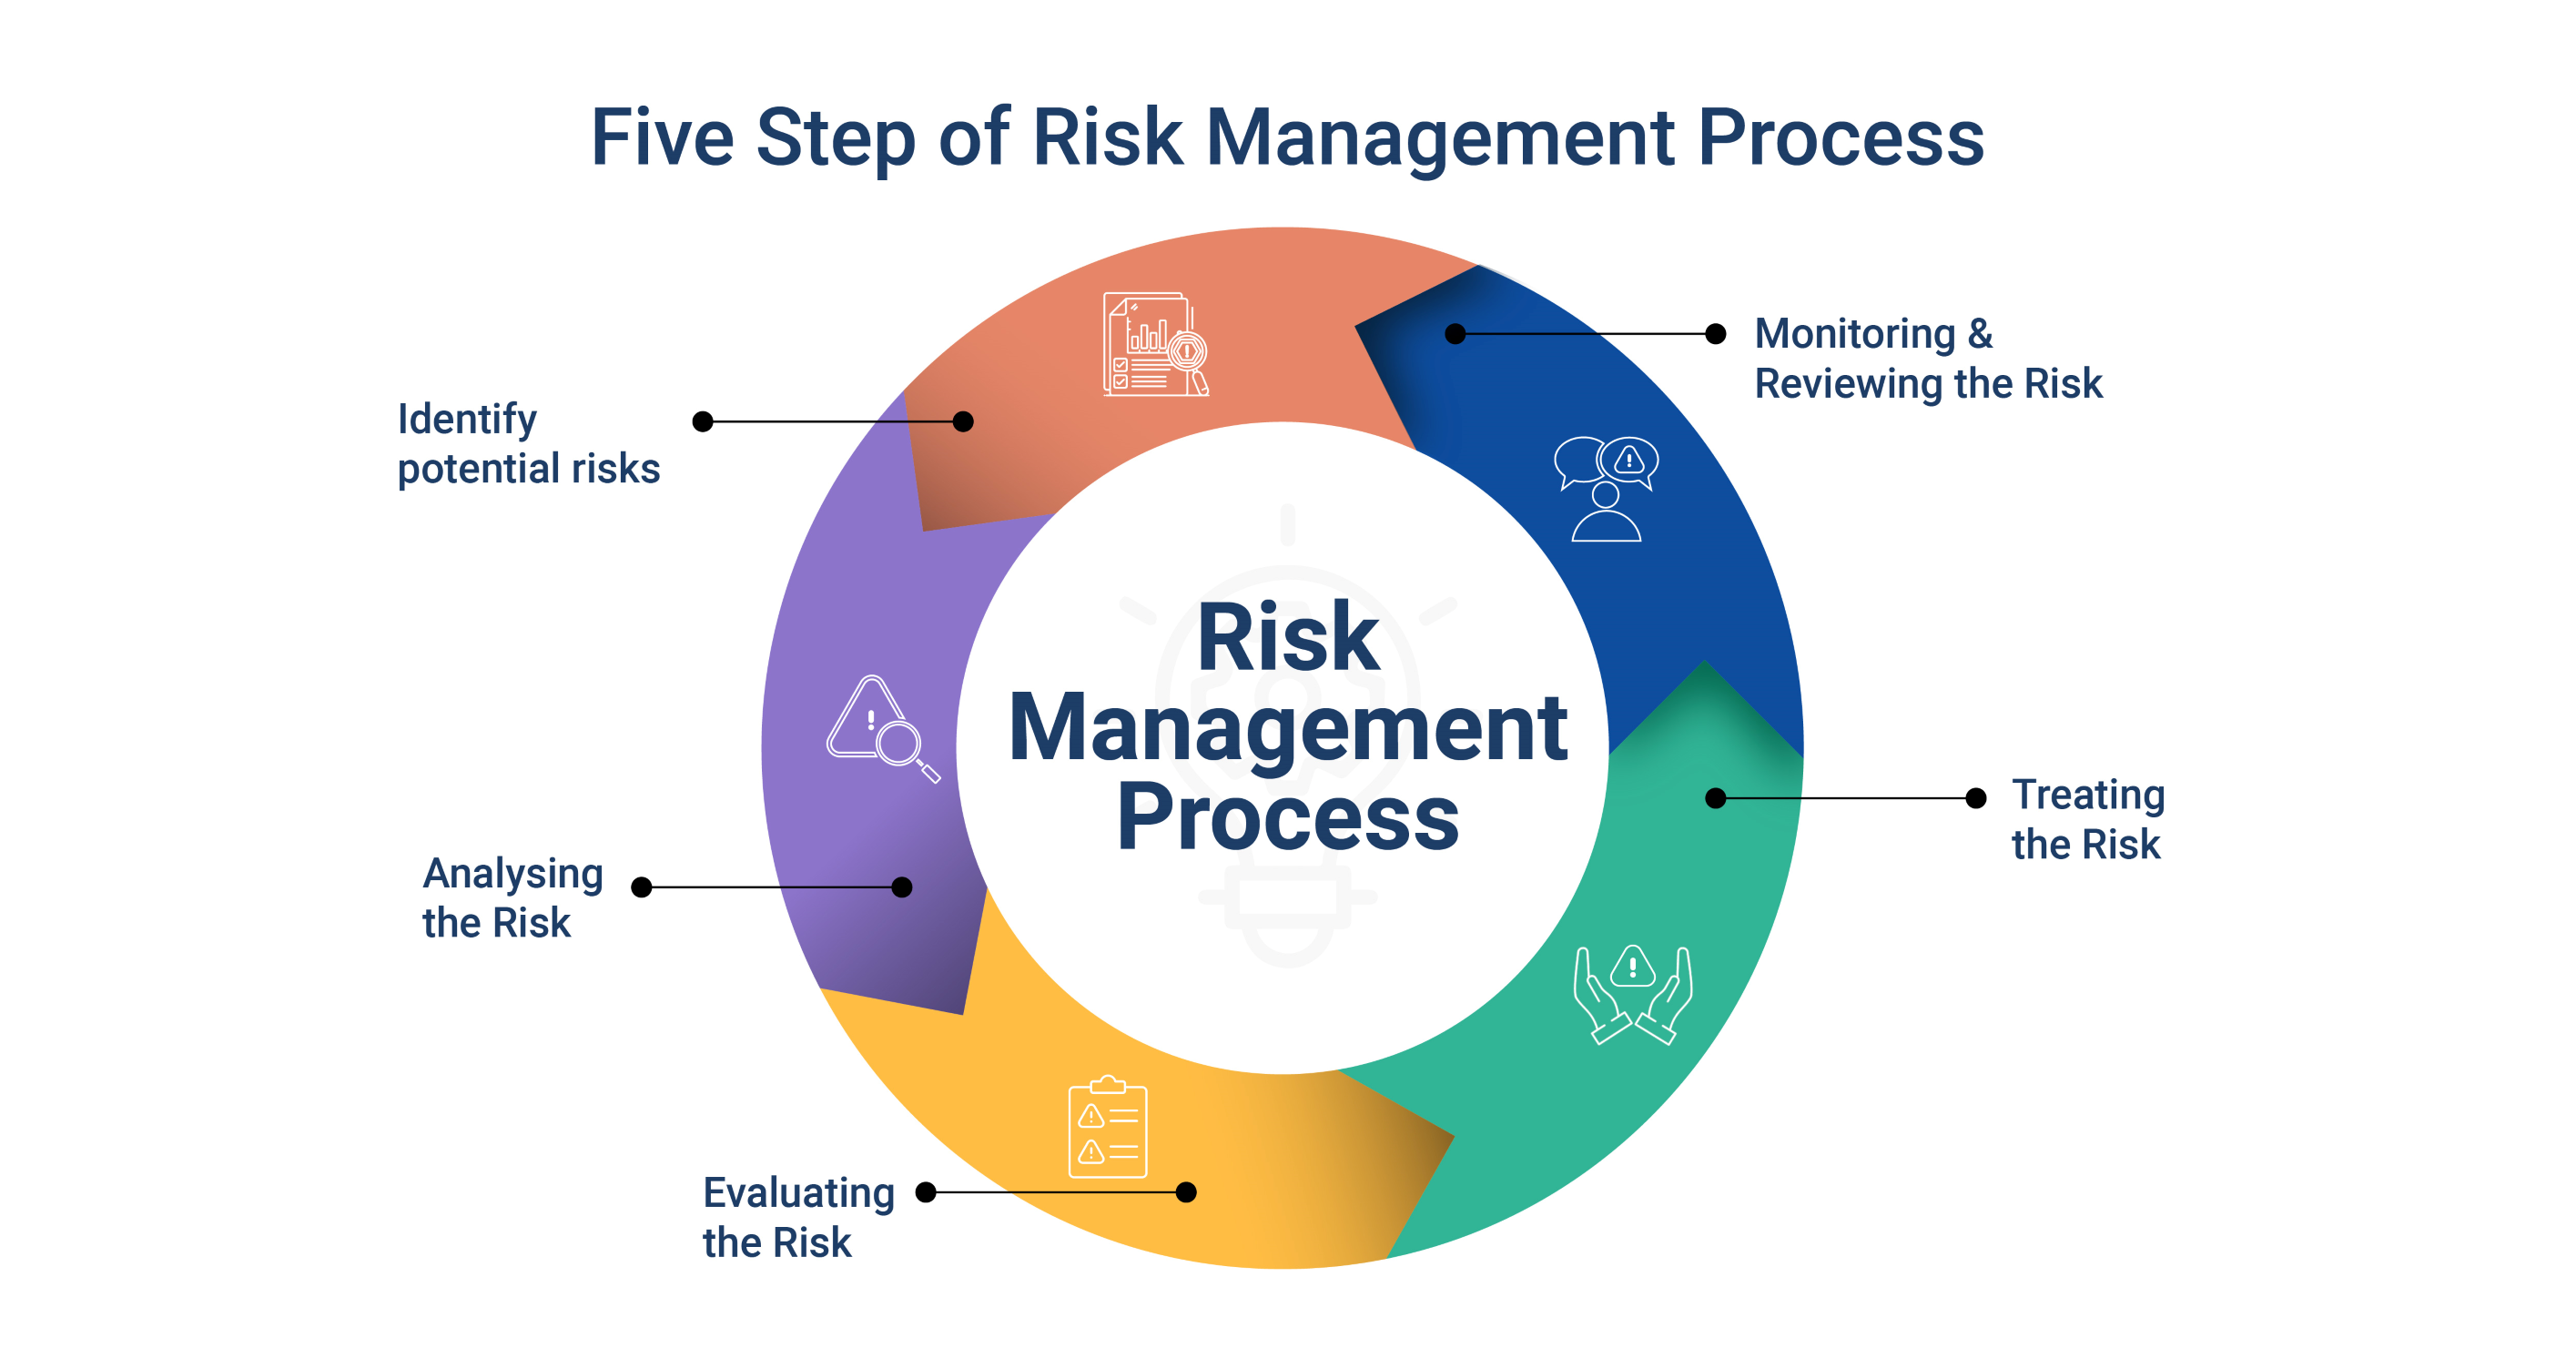 Five step of risk management process